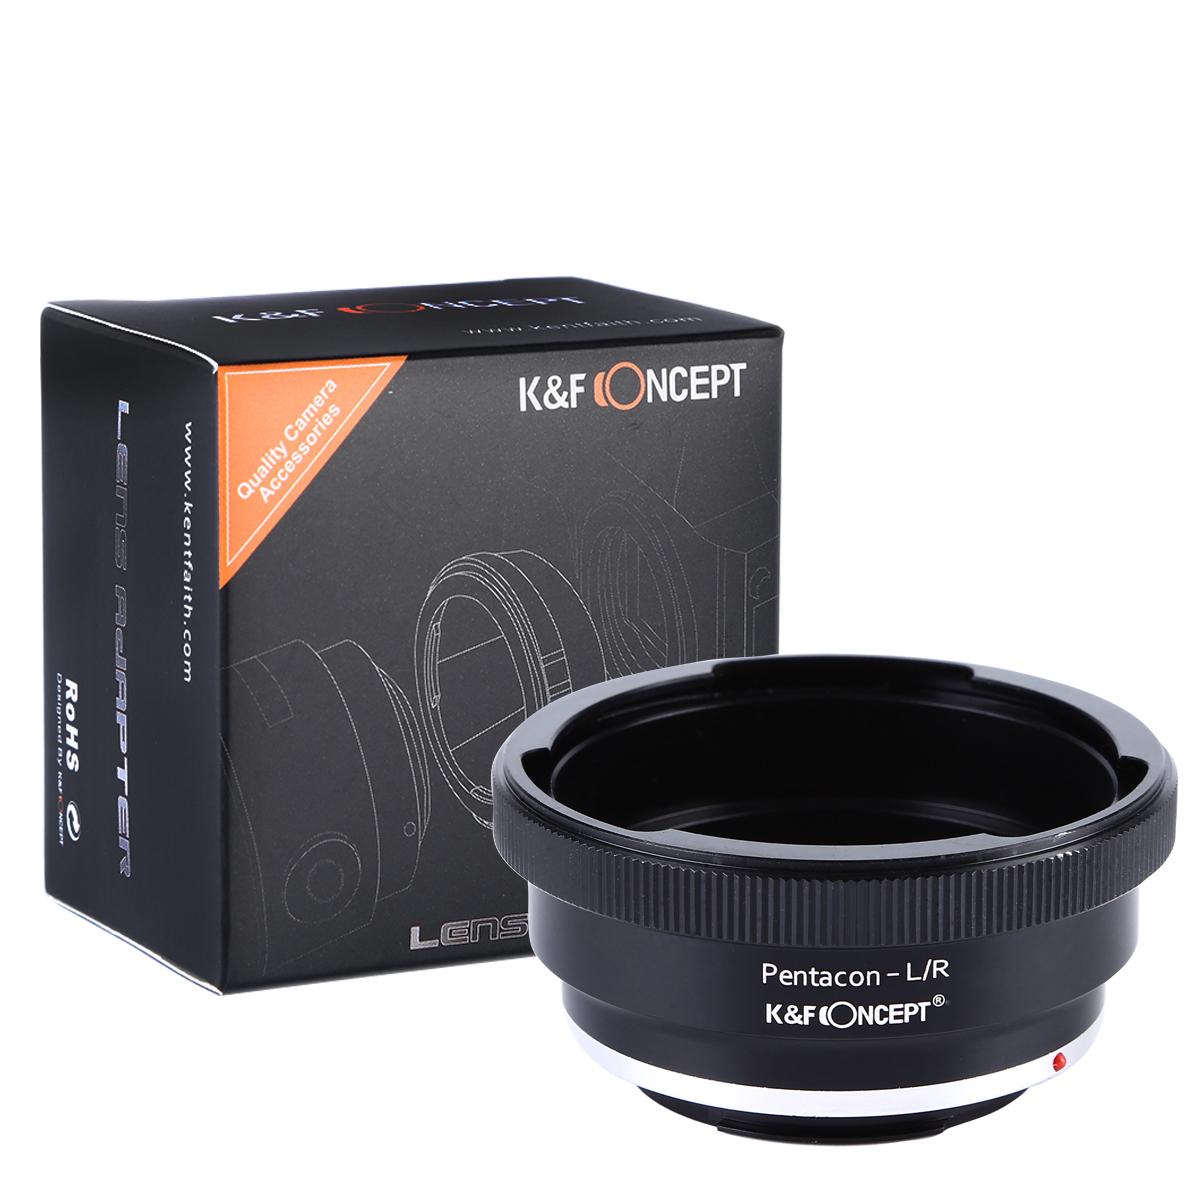 K&F Concept Pentacon 6 Kiev 60 Lenses to Leica R Lens Mount Adapter K&F Concept M27321 Lens Adapter